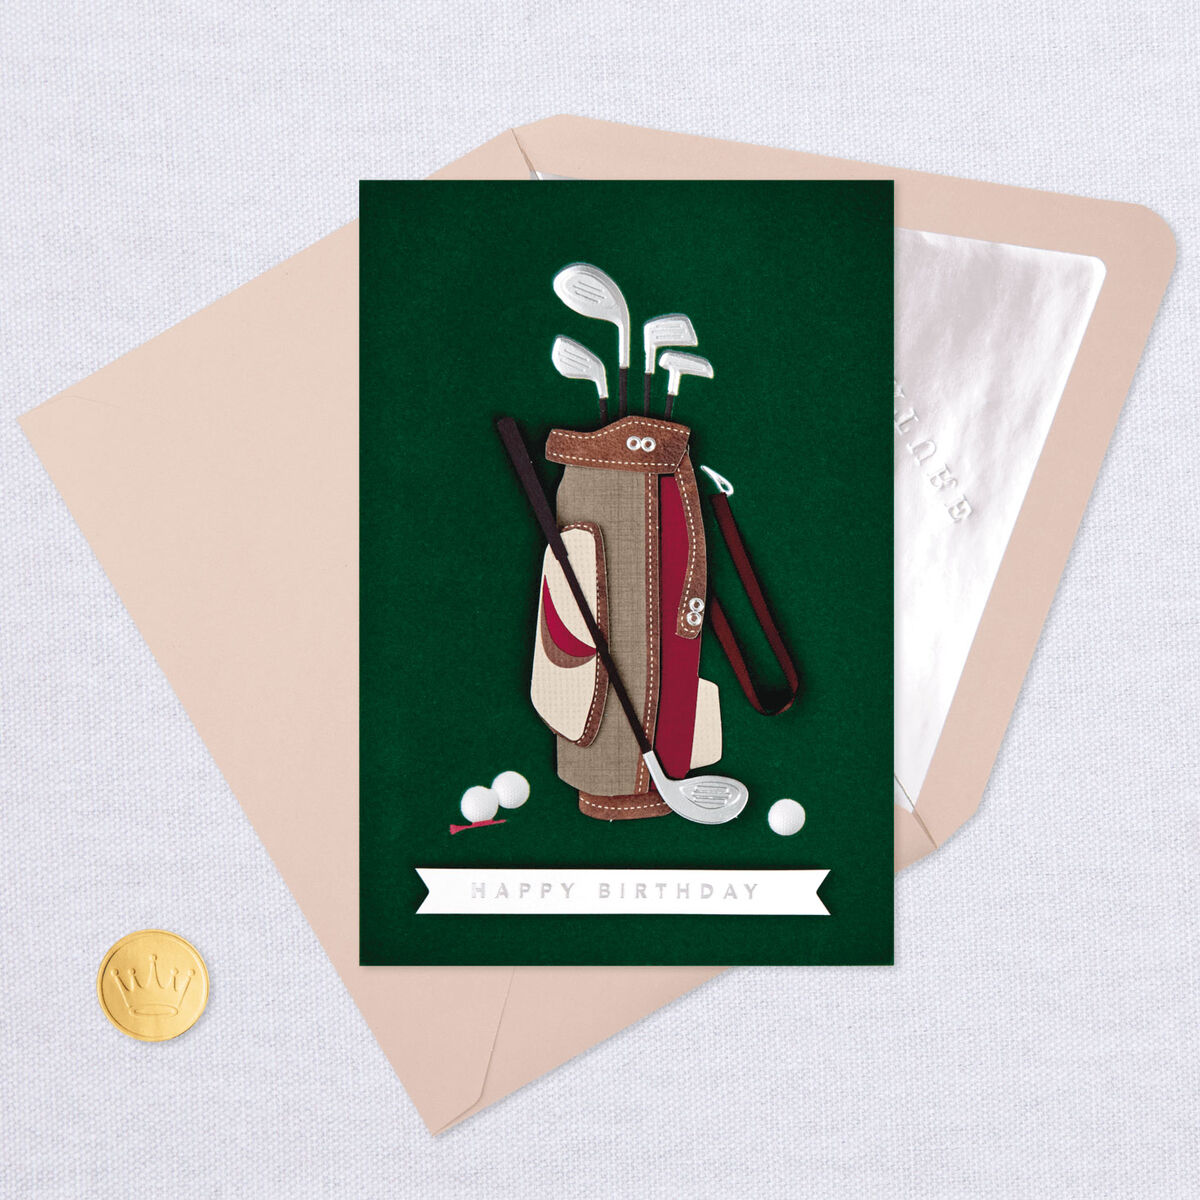 Golf Bag and Clubs Birthday Card - Greeting Cards - Hallmark